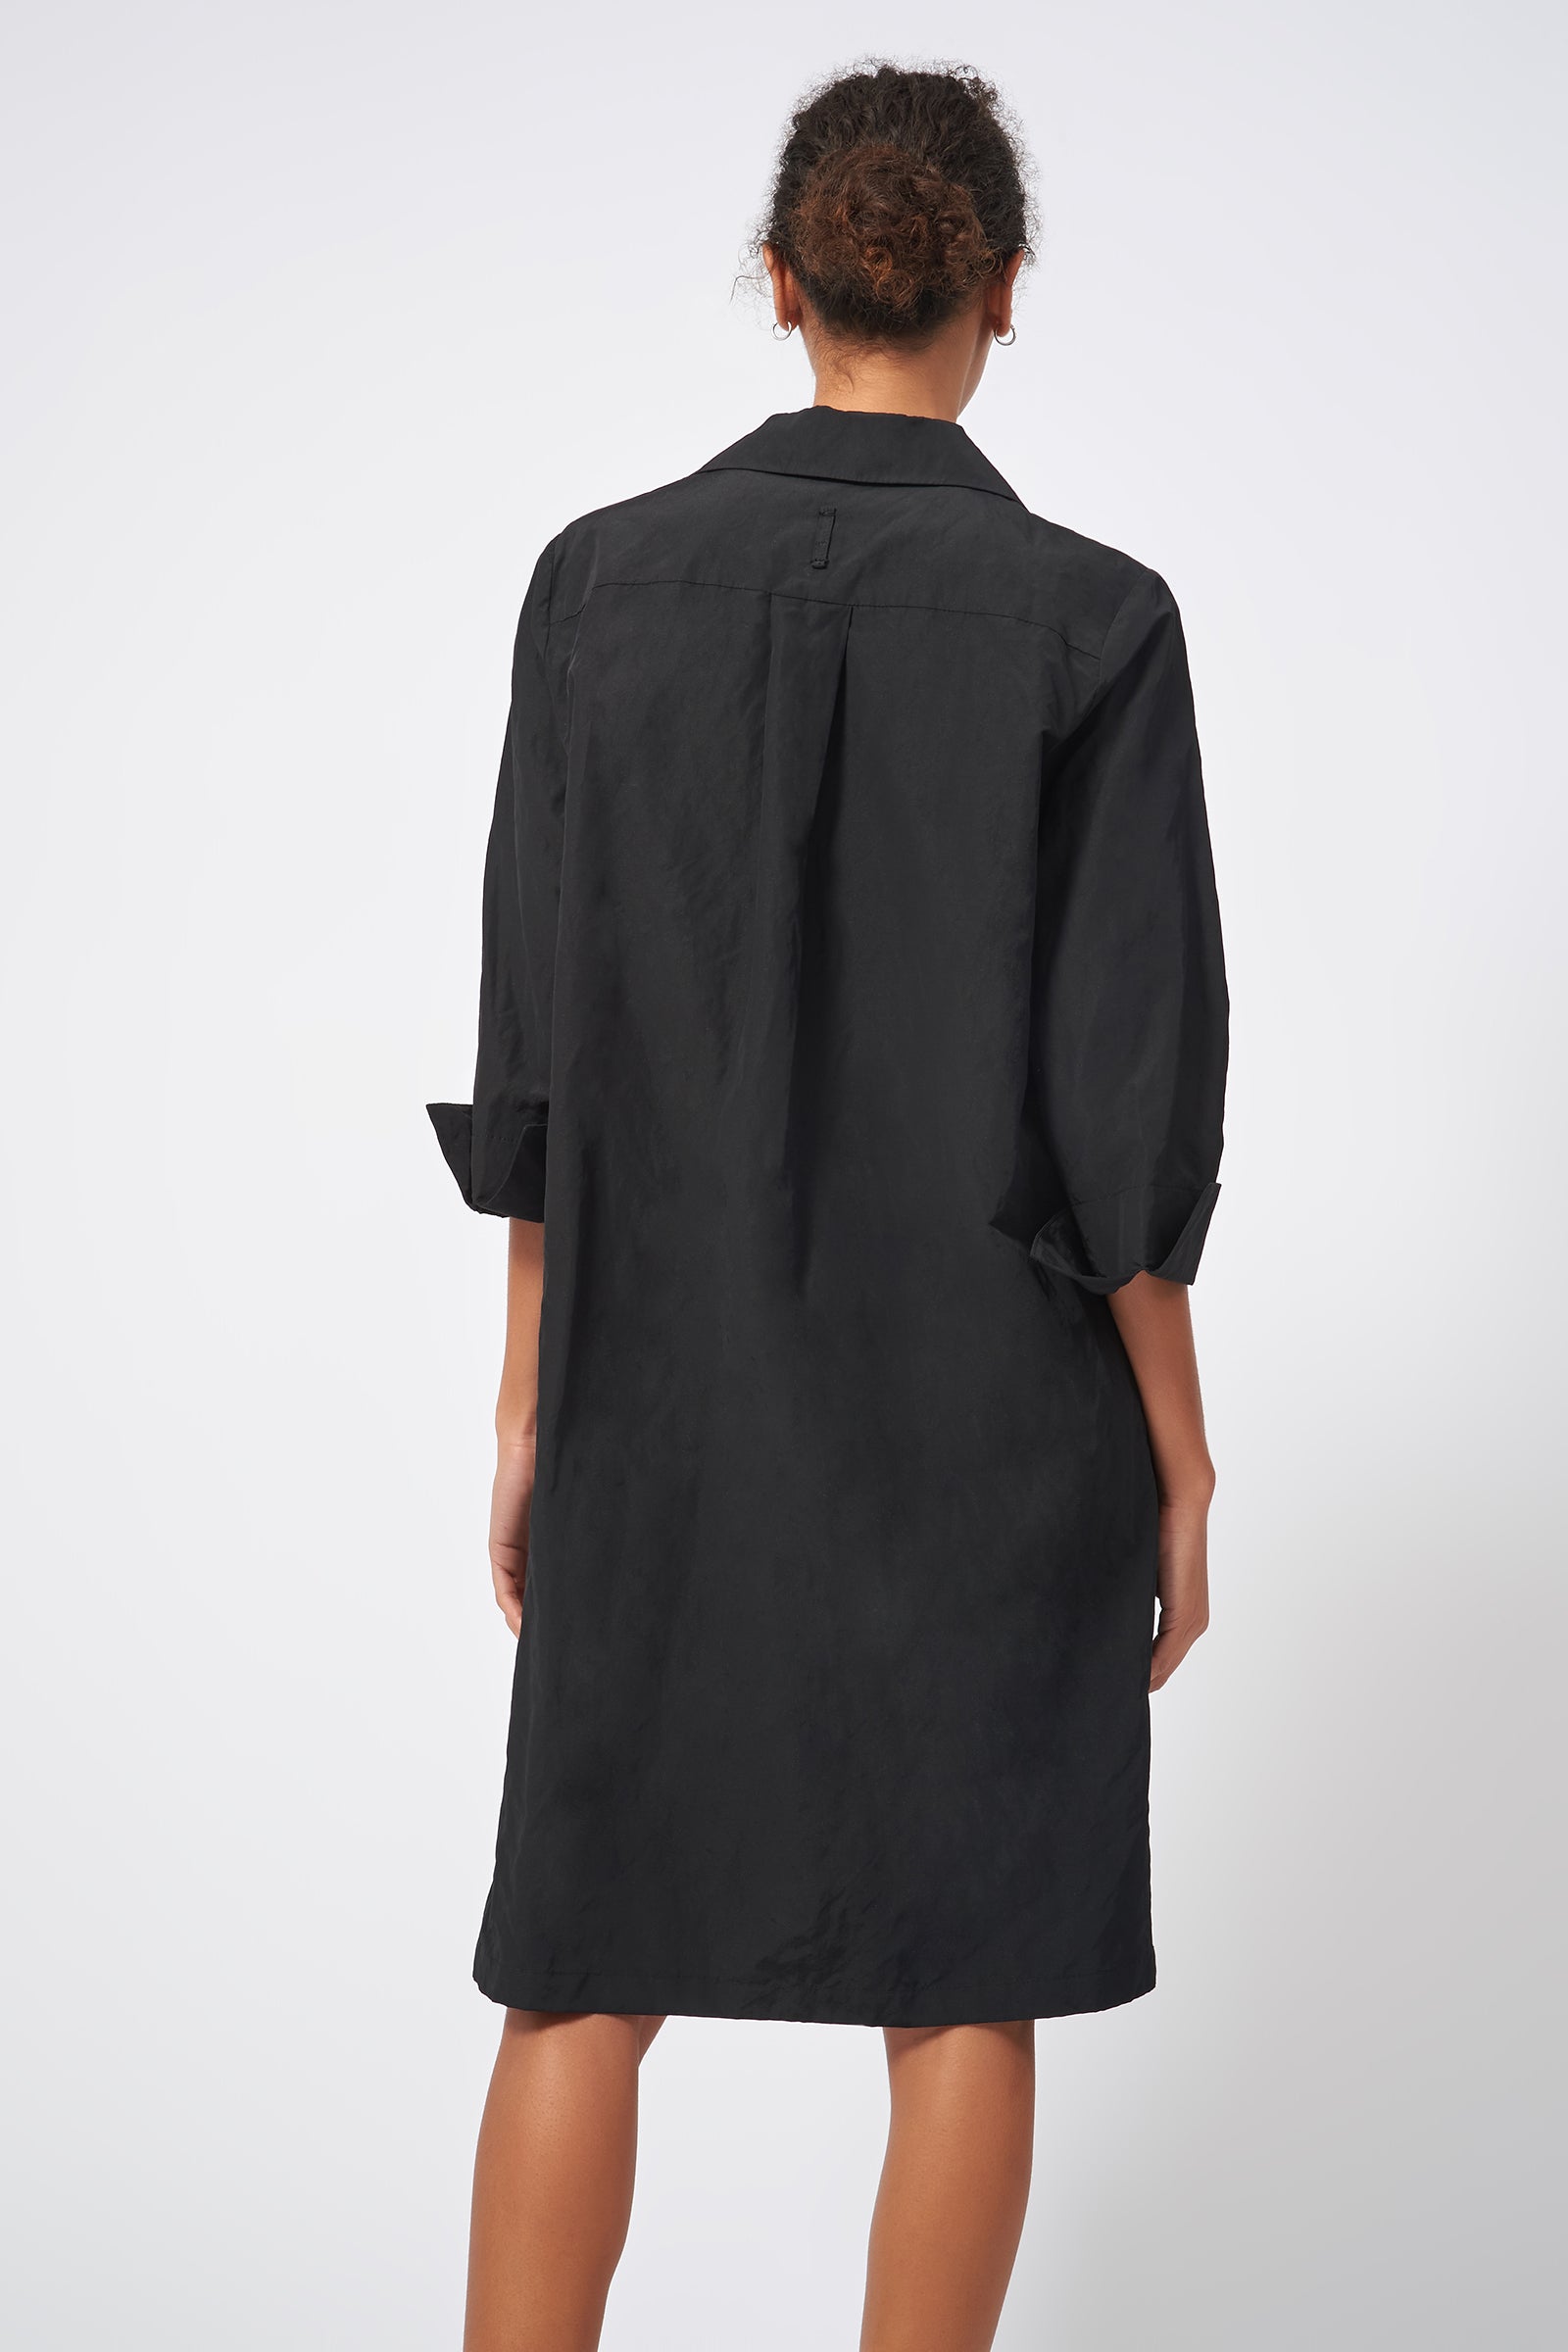 Kal Rieman Collared V Neck Dress Italian Cotton Nylon Inox Black On Model Back View